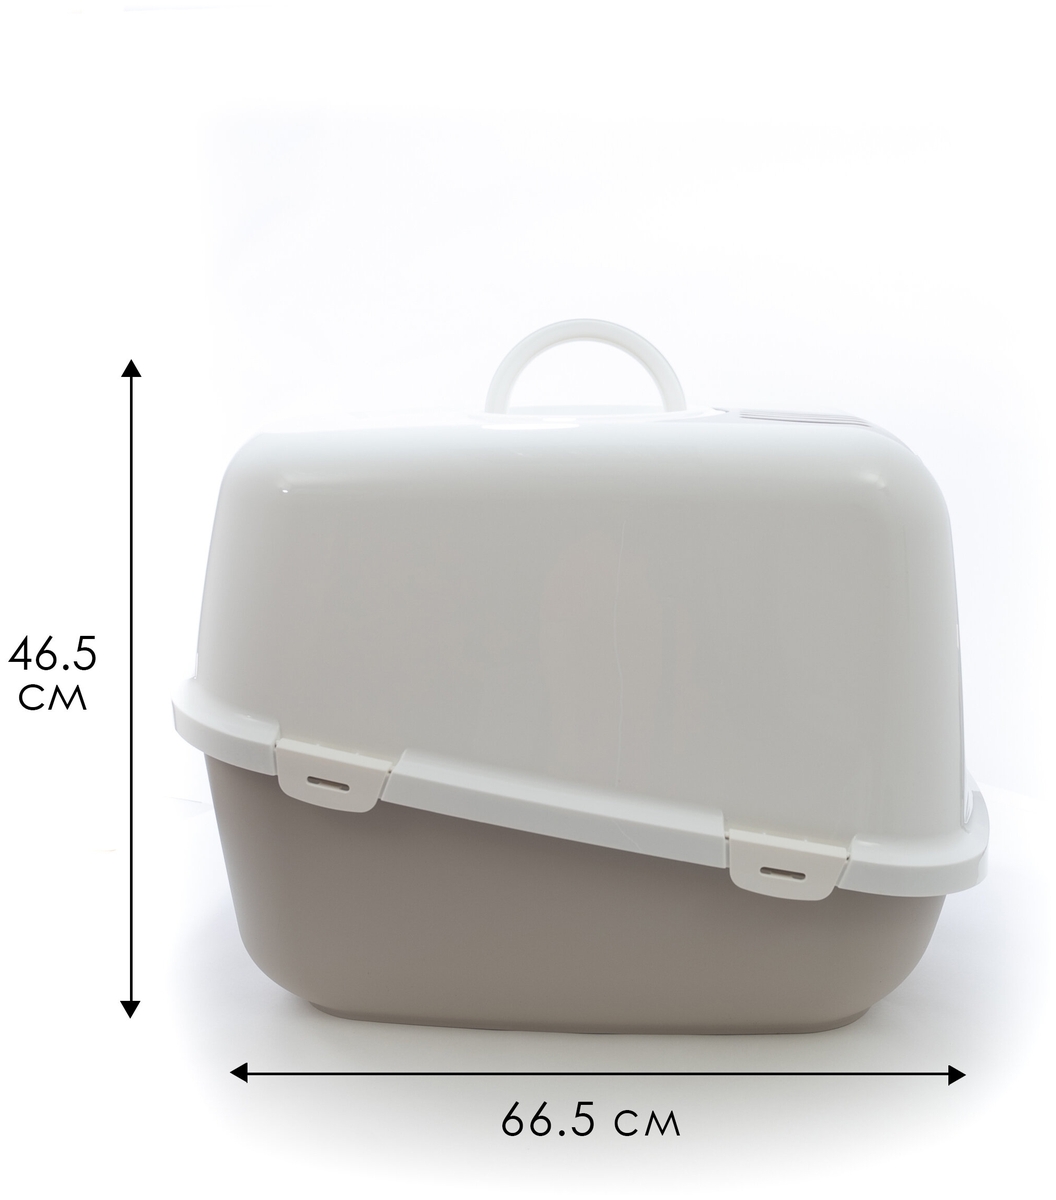 Цена Туалет-био SAVIC Nestor Jumbo белый/мокко A0200-0WMC (66,5x48,5x46,5)